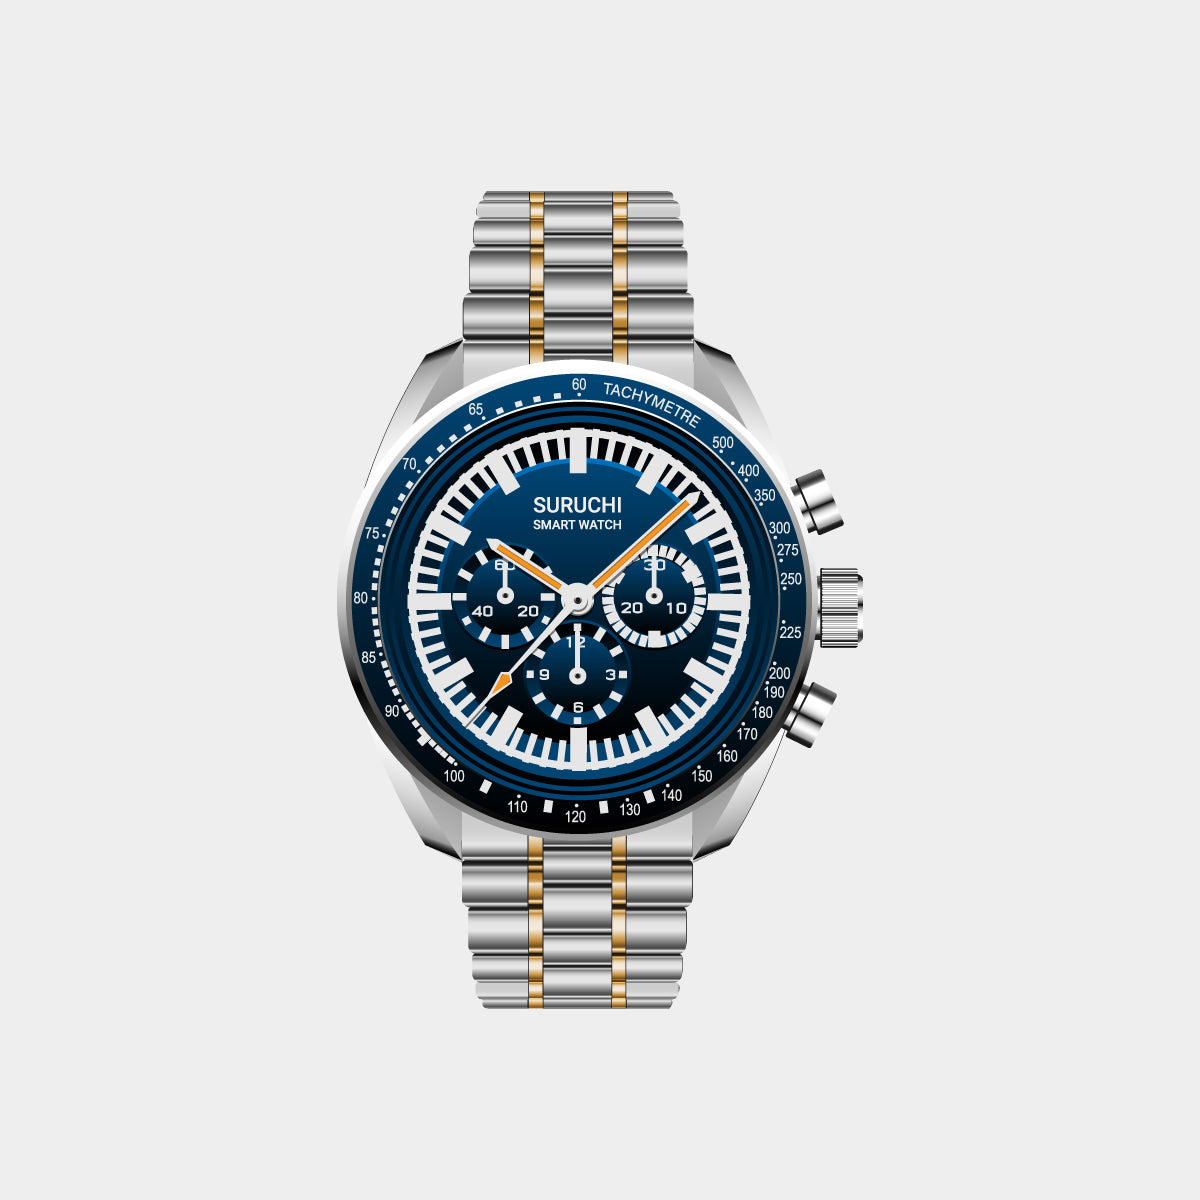 Time Elegance fictional watch